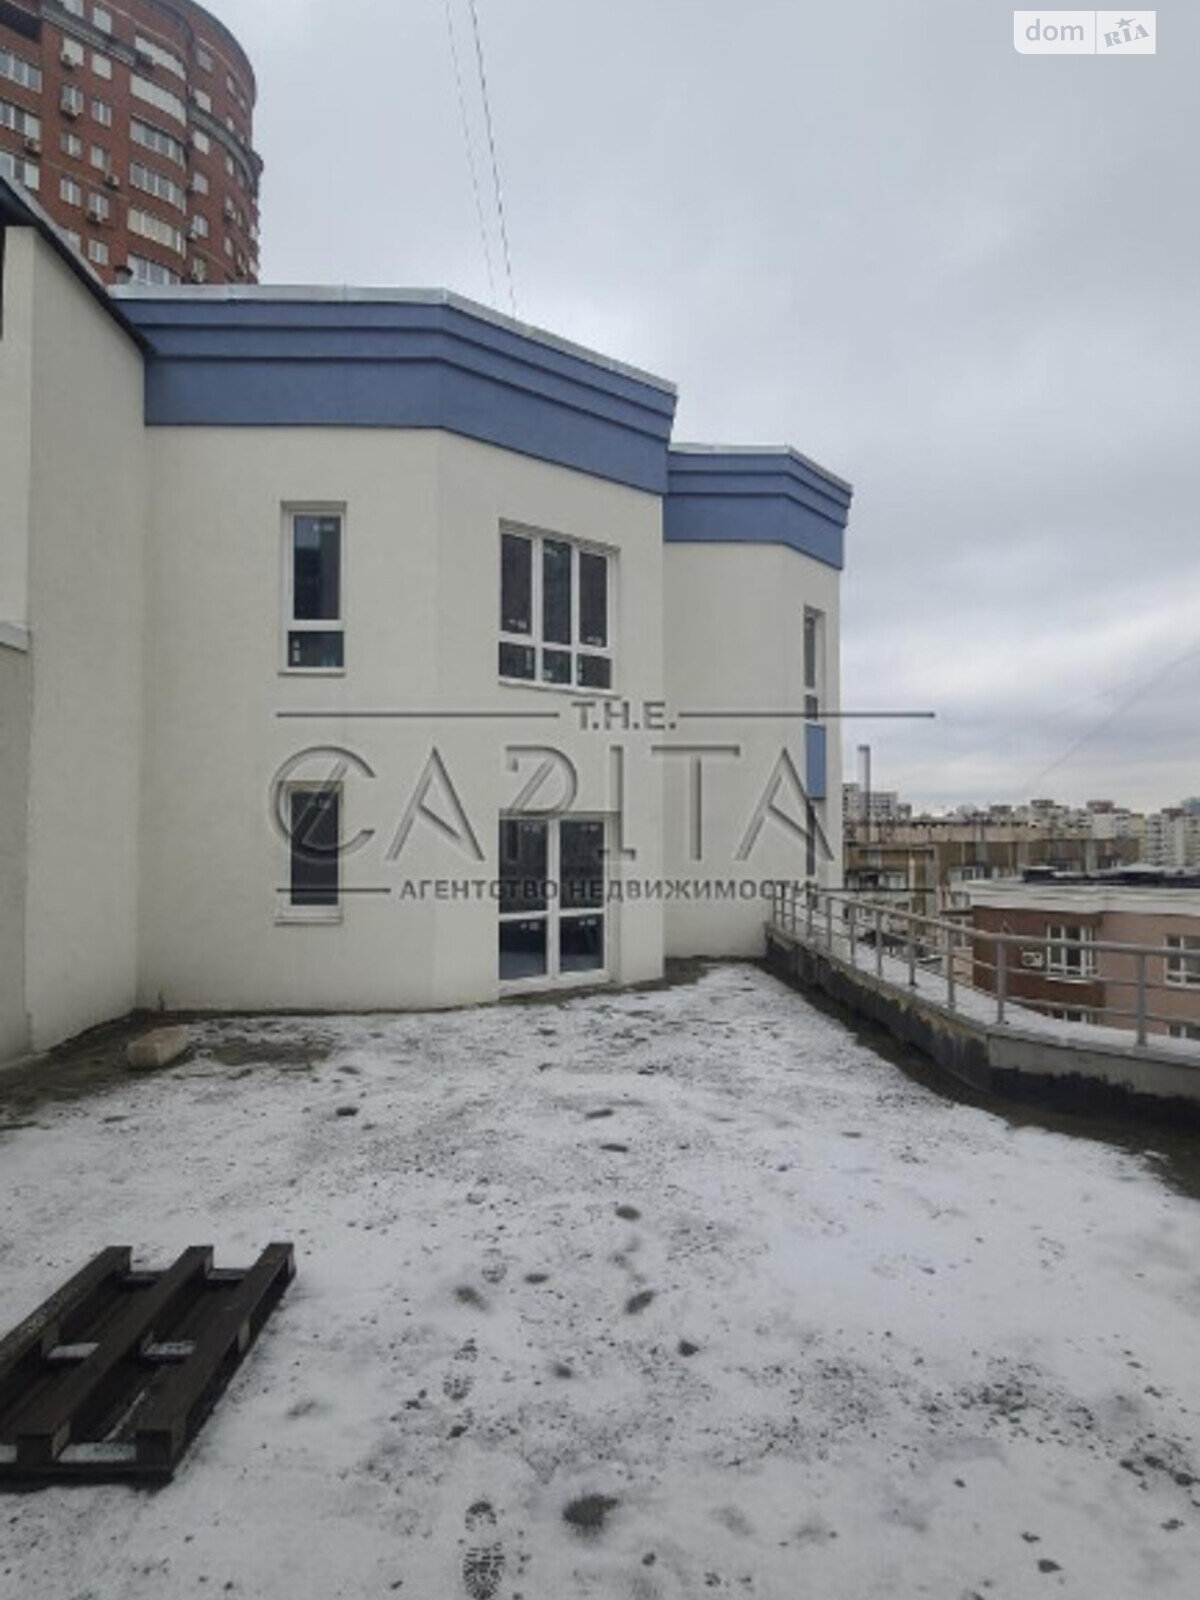 Продажа трехкомнатной квартиры в Киеве, на ул. Драгоманова 38, район Дарницкий фото 1